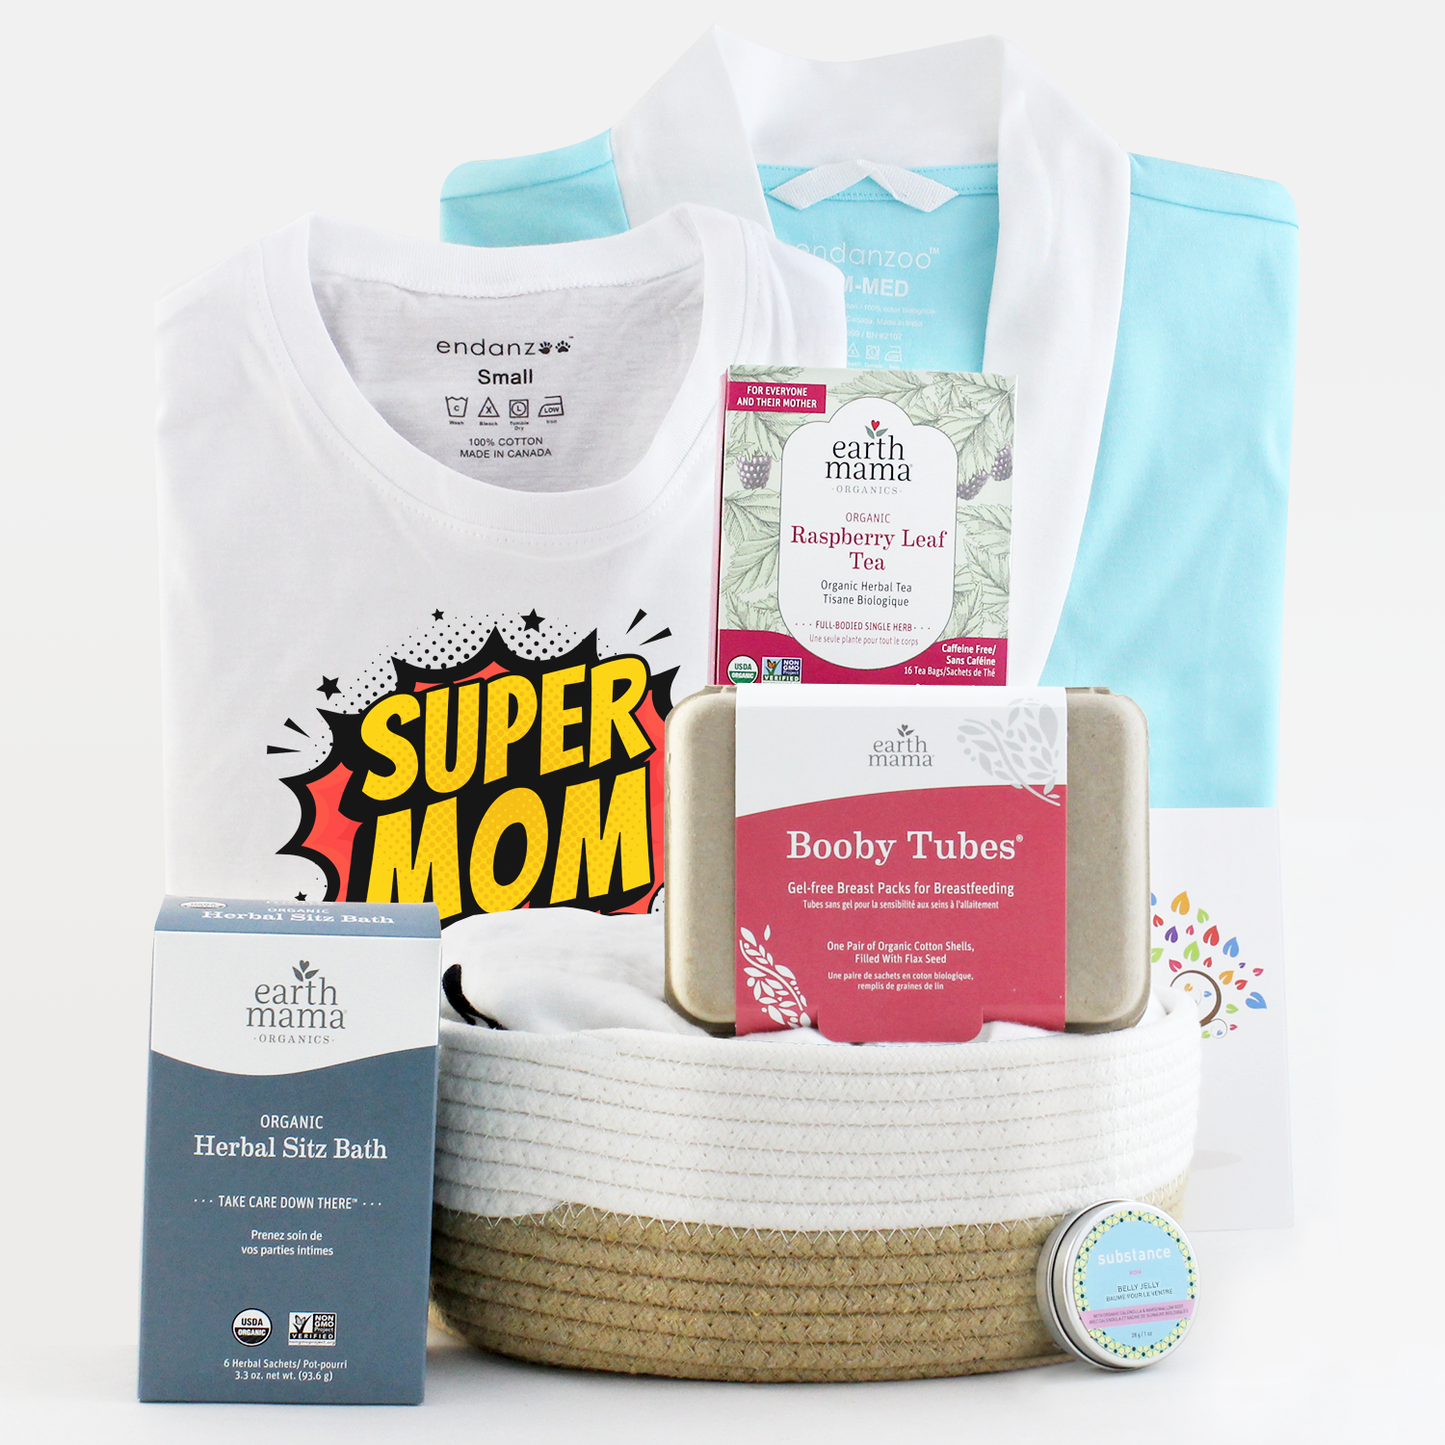 Zeronto Postpartum Gift Basket for New Mom - Recovery Magic (Blue) – Baby  Joy Canada